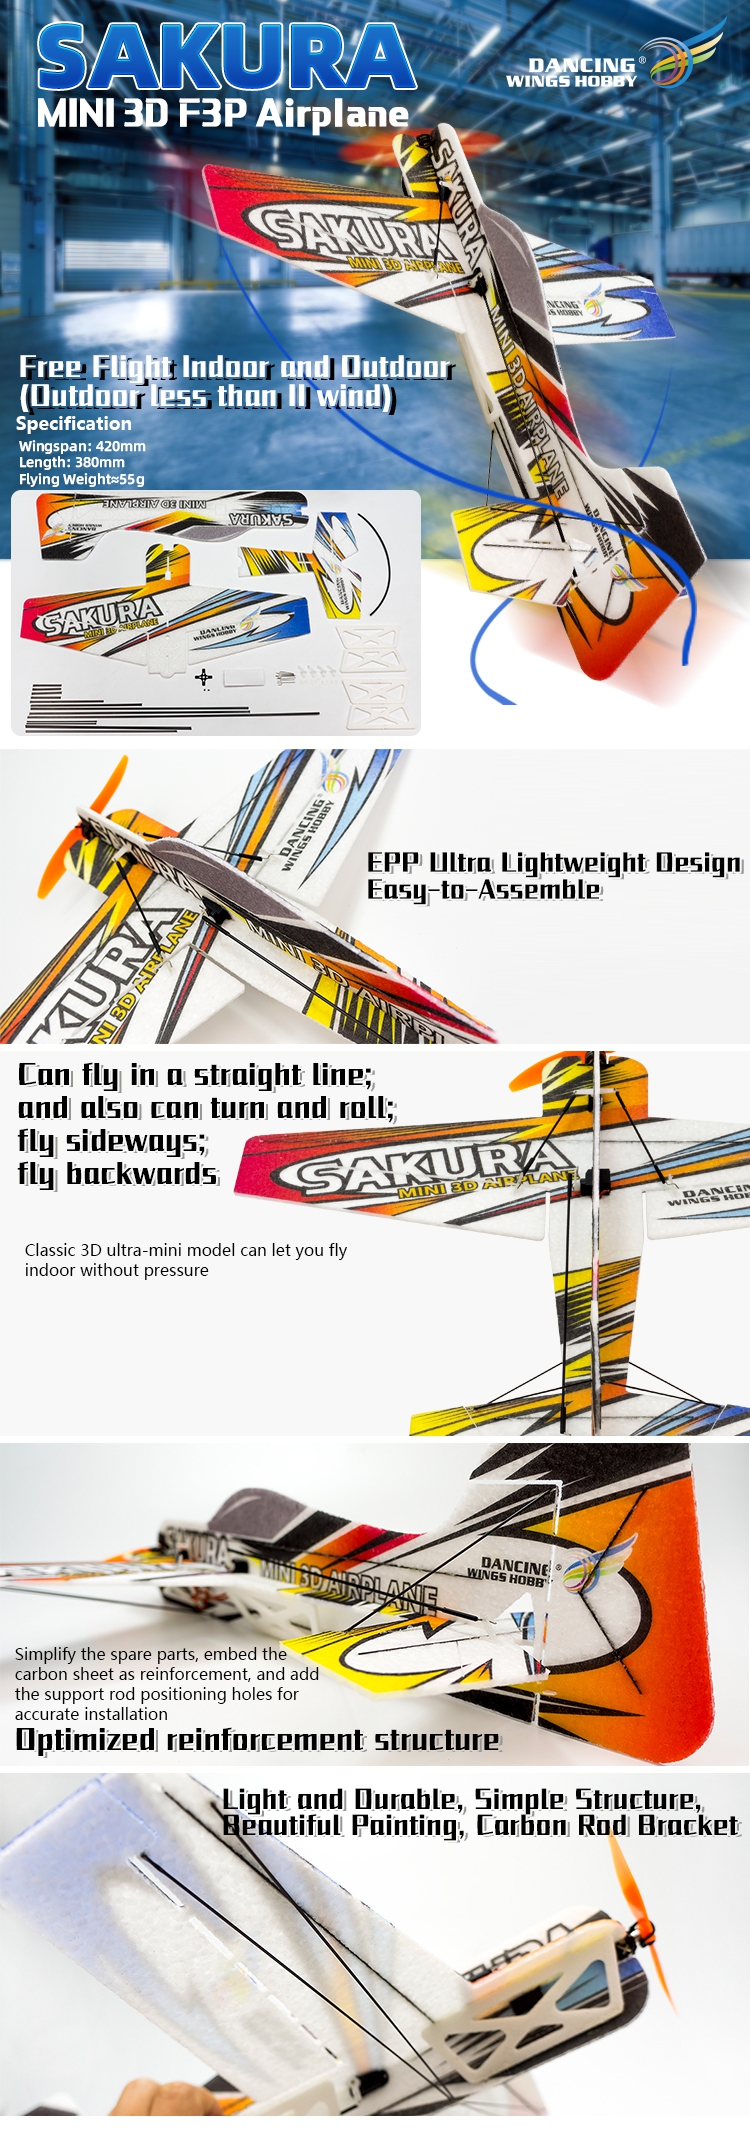 E211-MINI-3D-Airplane-Kit-420mm-Wingspan-Trainer-for-Beginner-3D-Aerobatic-RC-Aircraft-Stunt-Plane-1557651-1